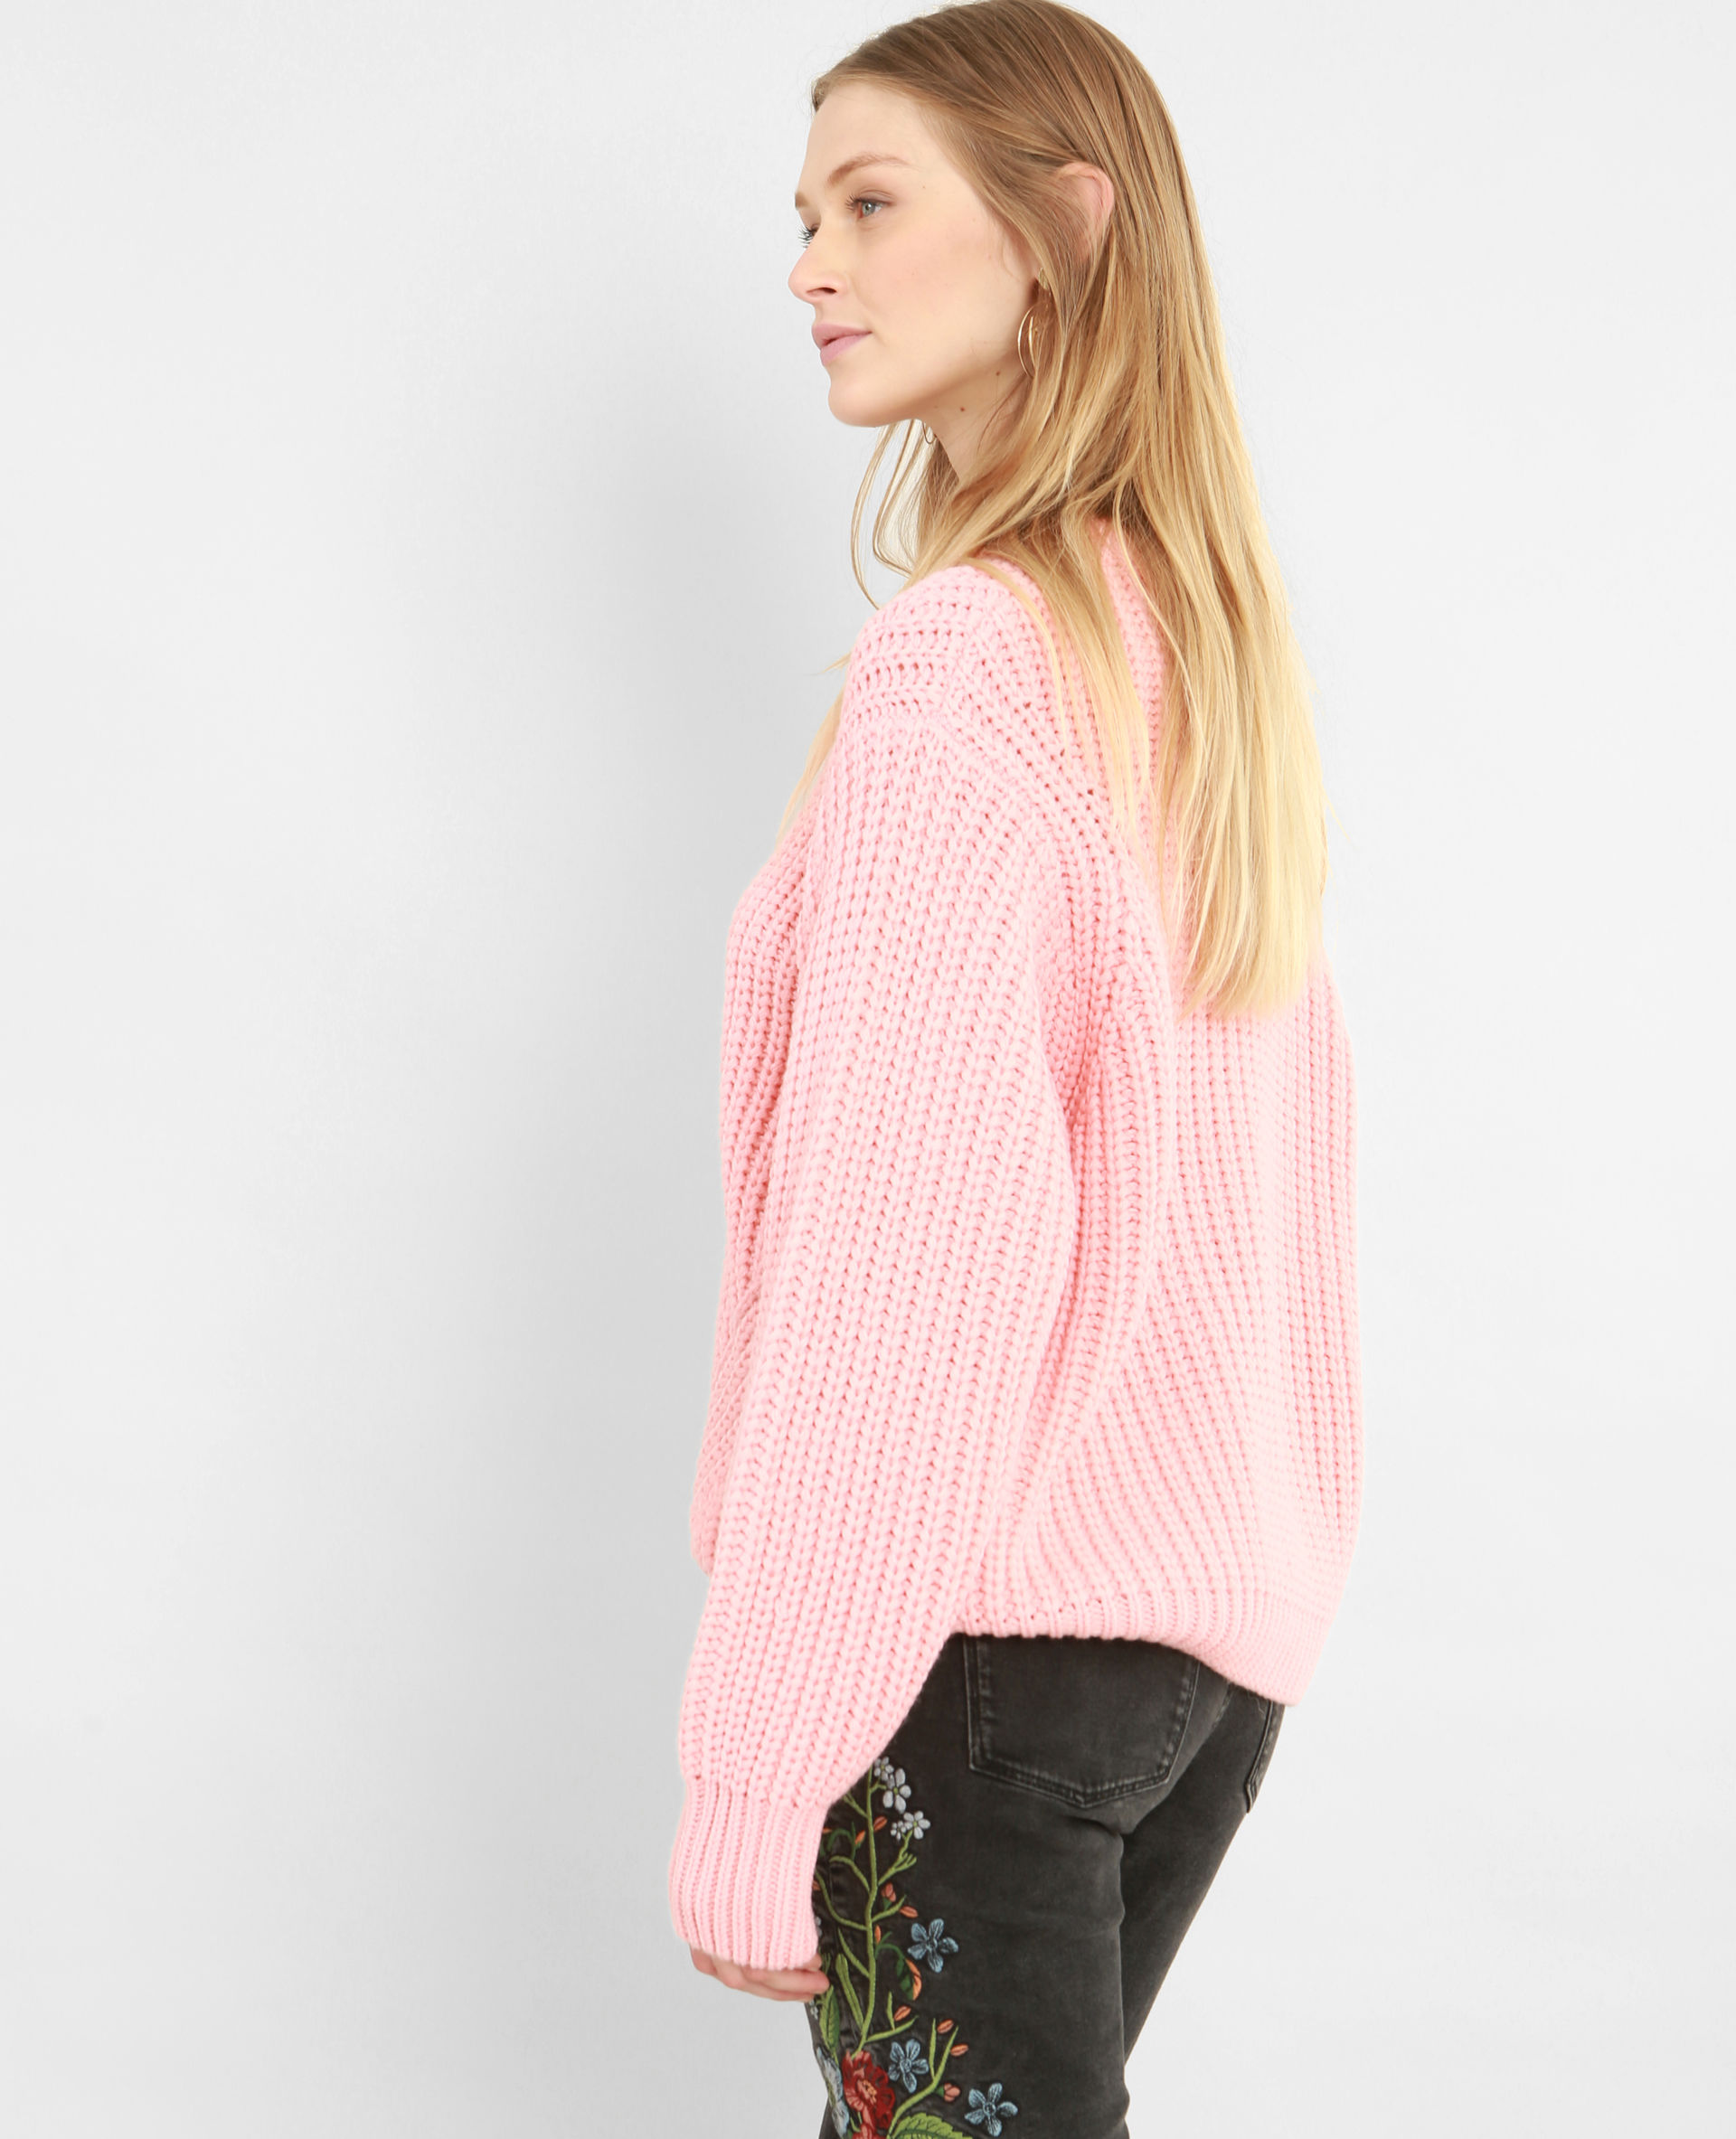 Chunky Knit Sweater - Das
Design hier zu bleiben